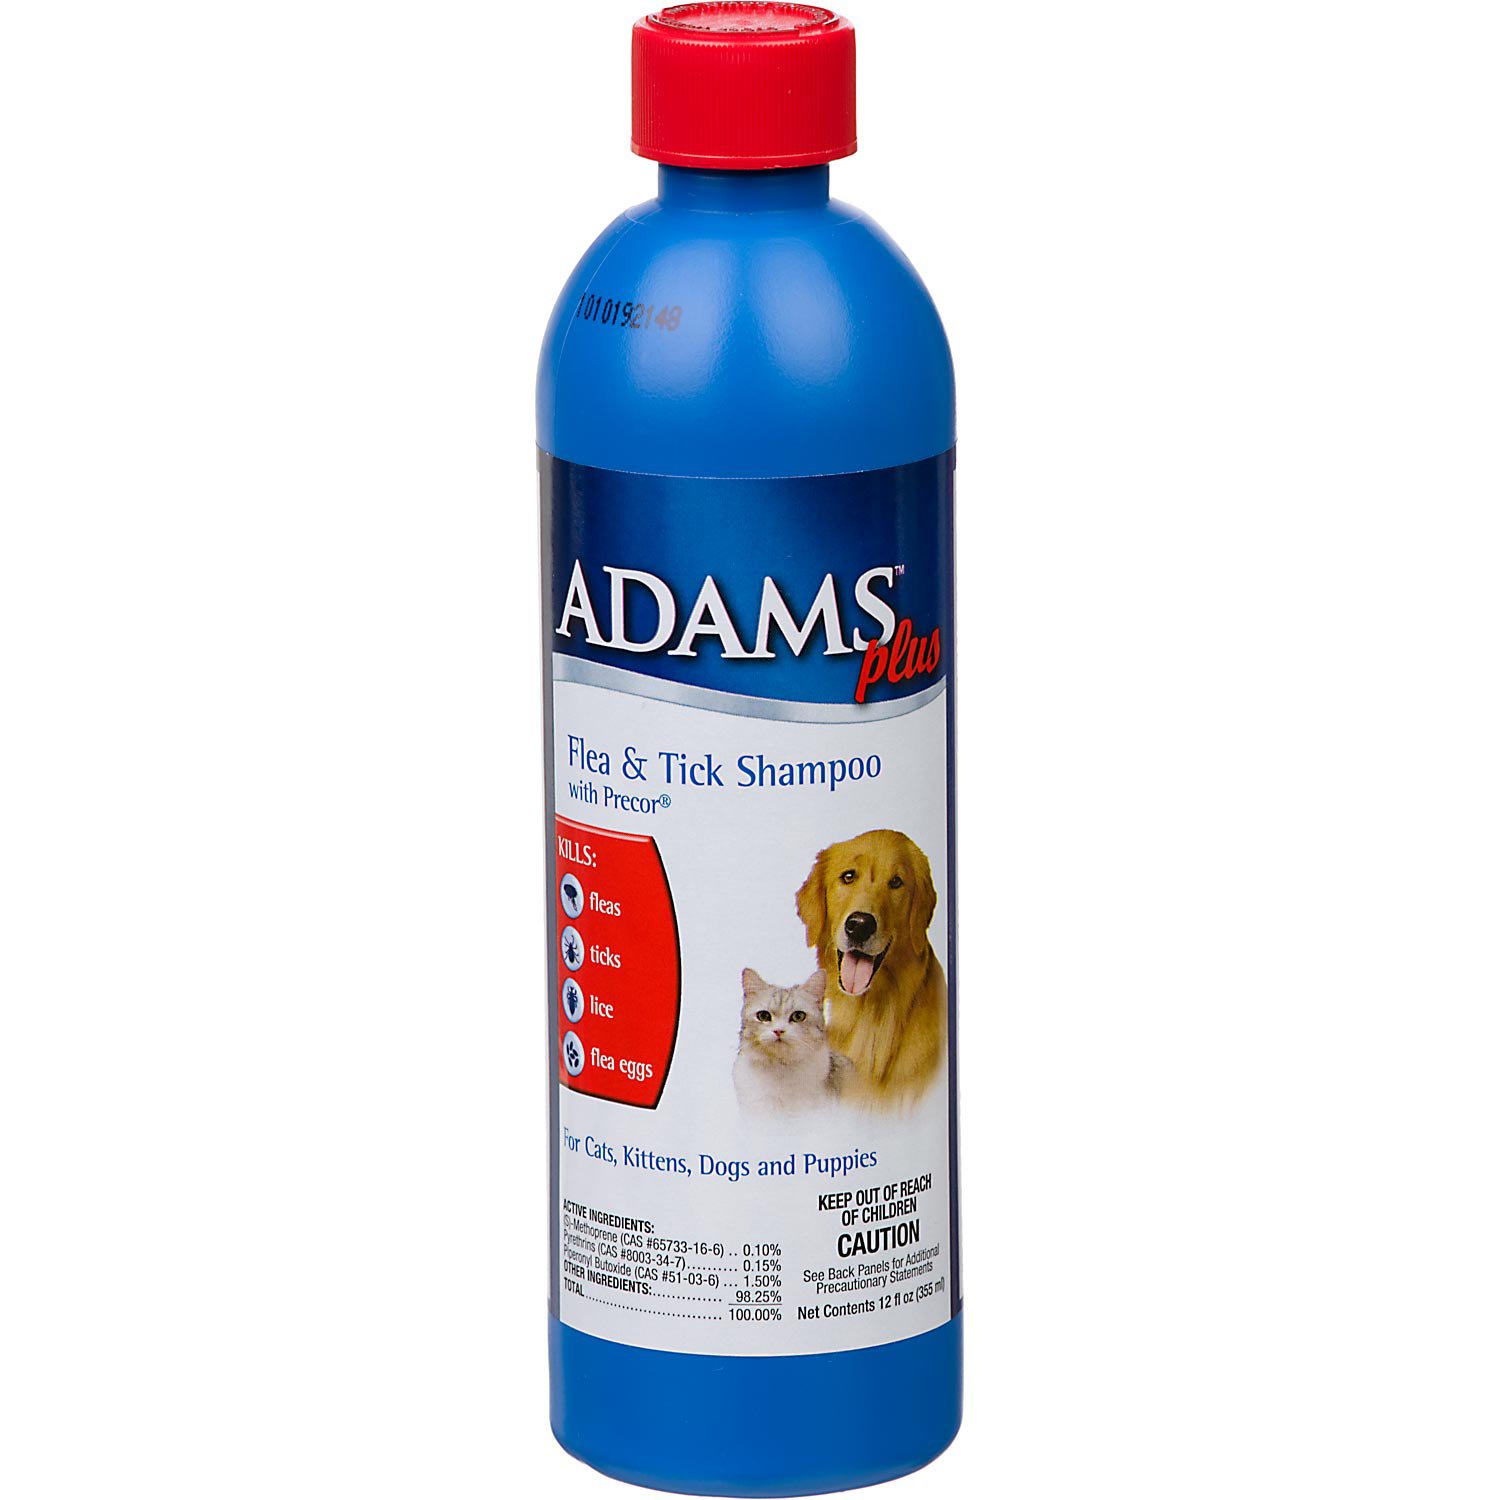 adams flea & tick shampoo